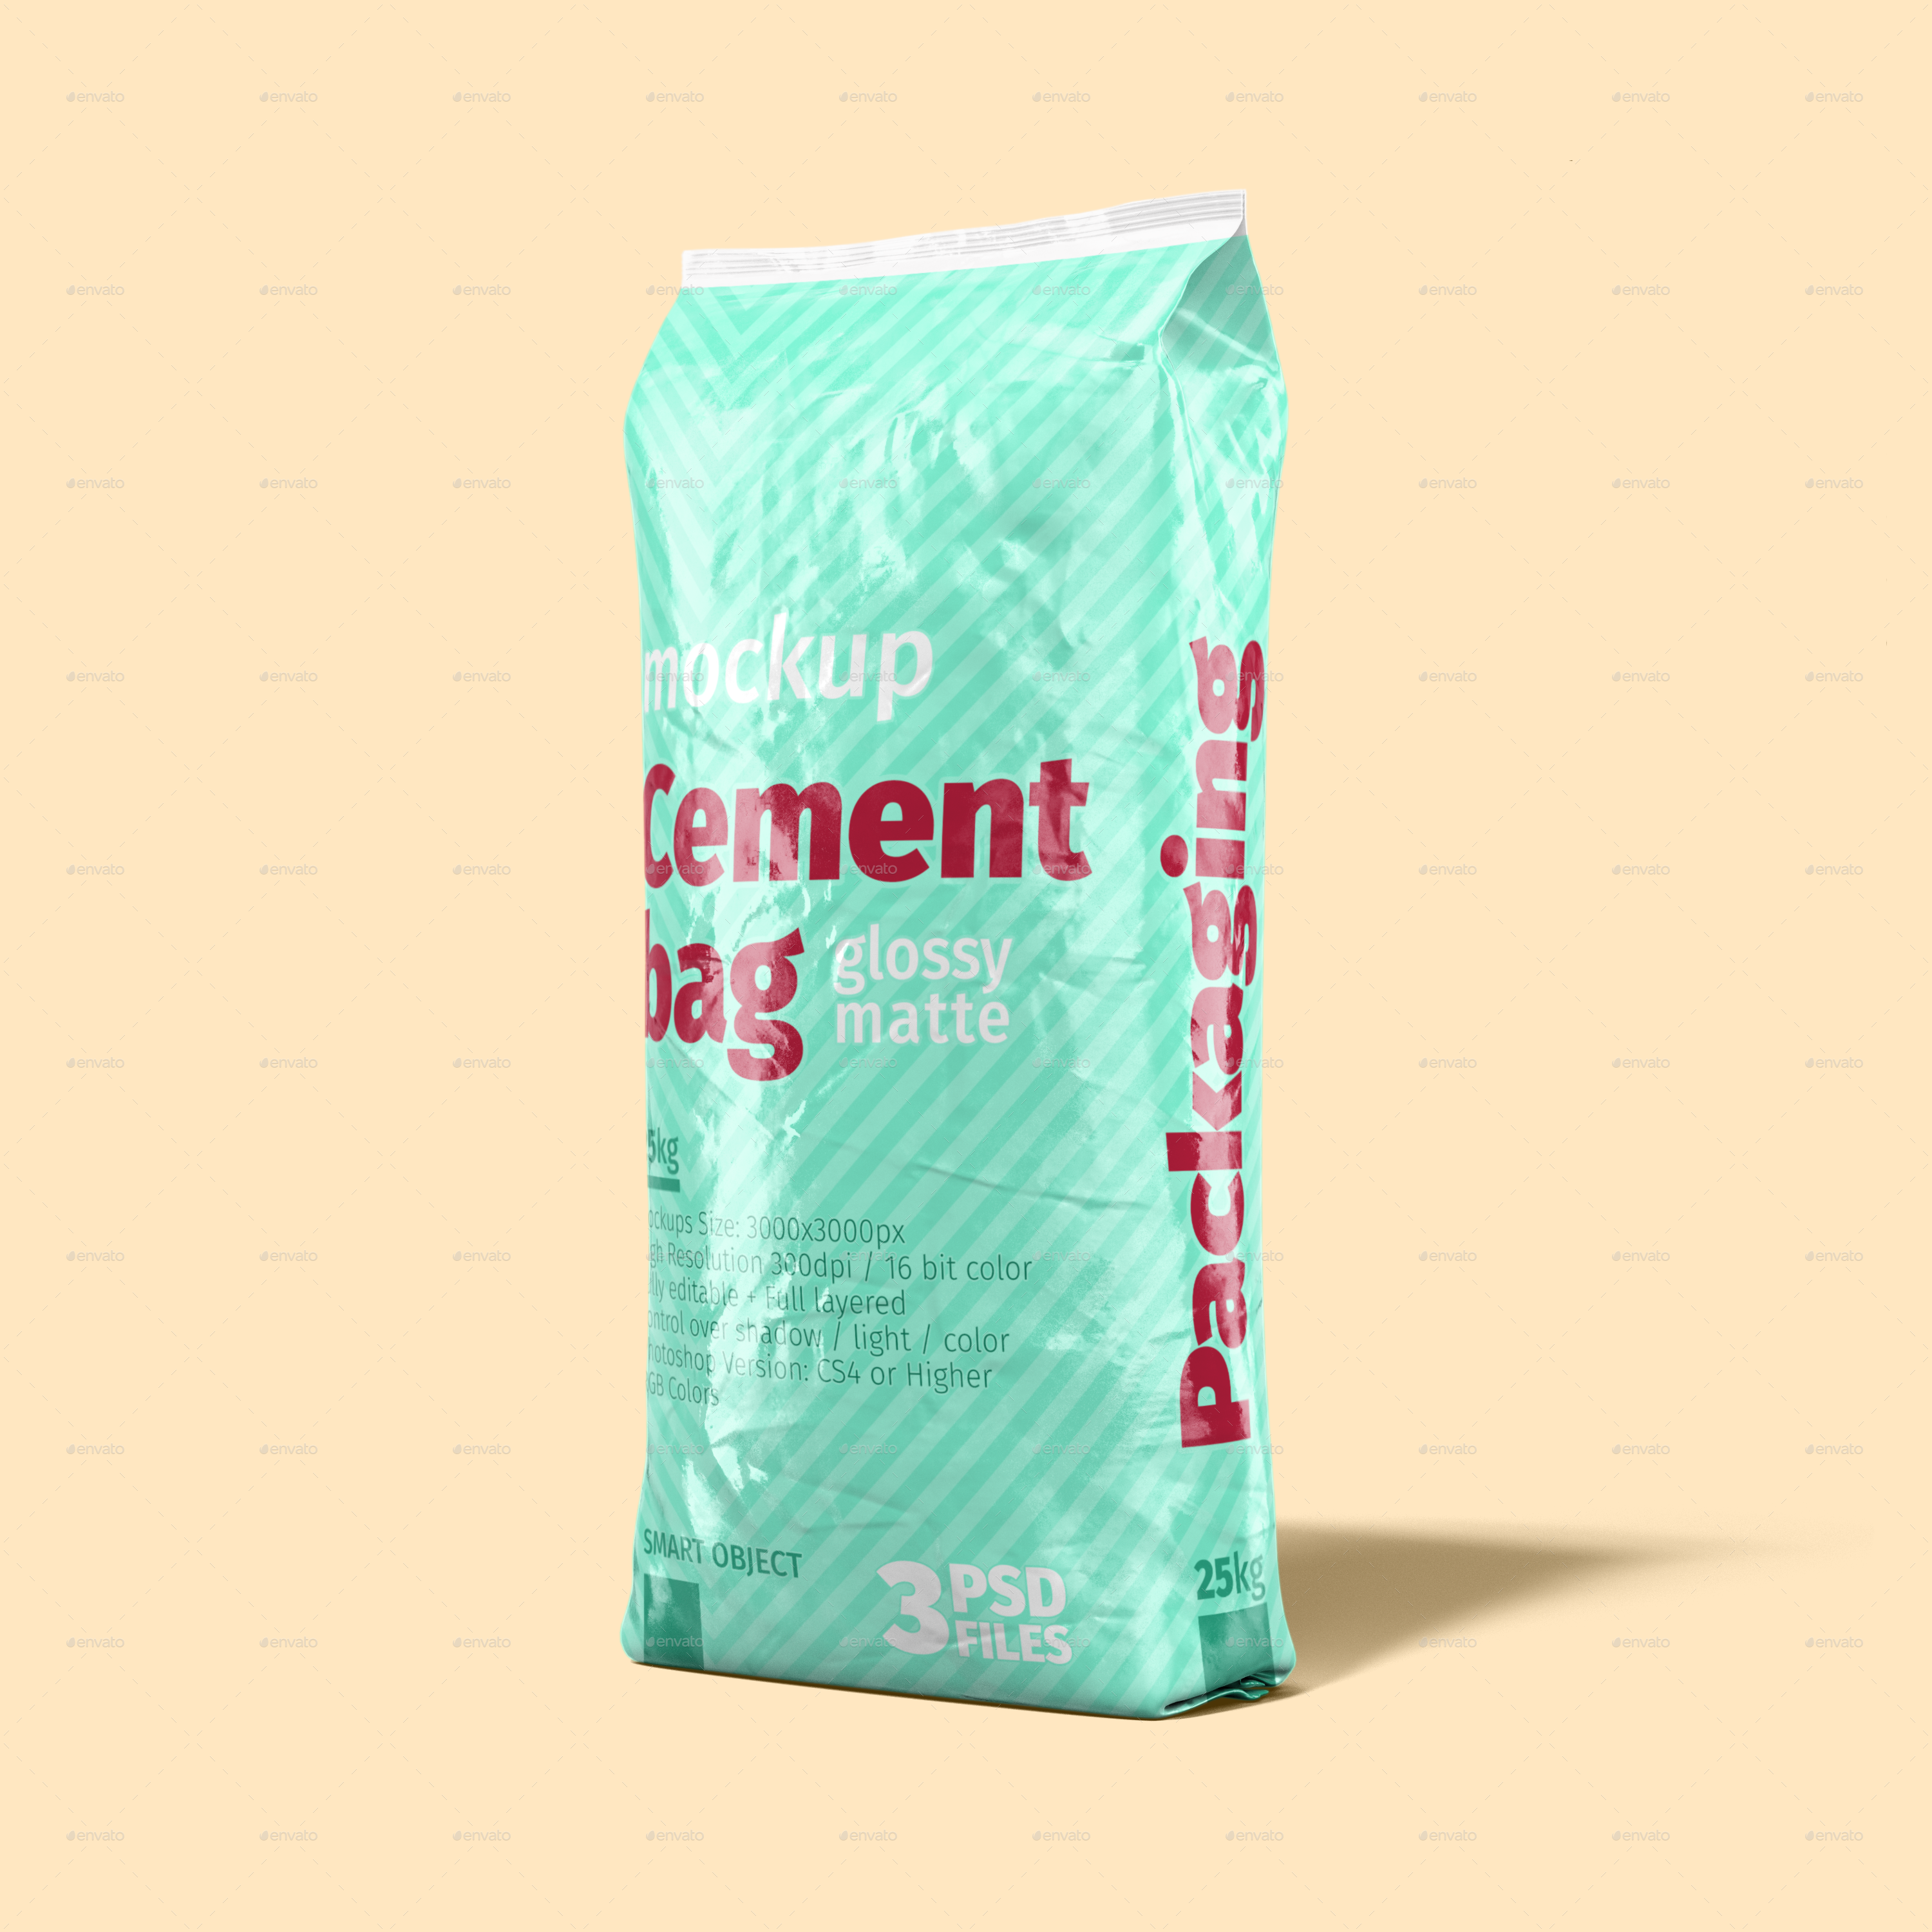 Download Cement Bag Mock-Up by Radetzki | GraphicRiver